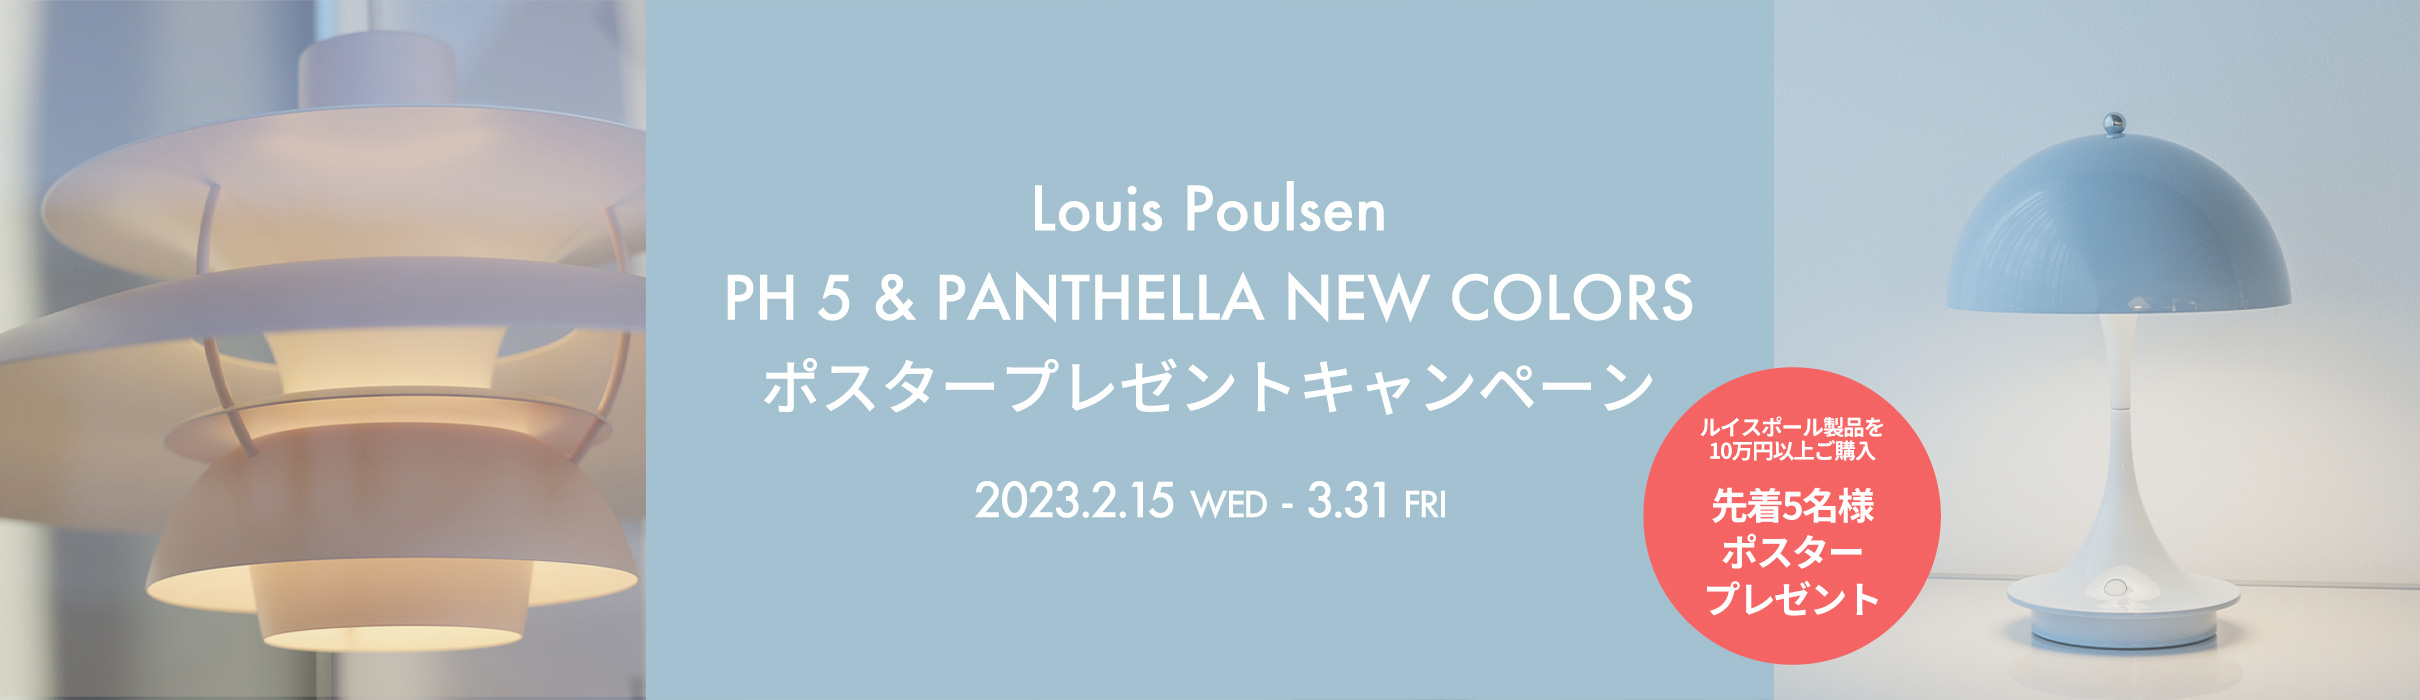 Louis Poulsen - PH 5 & Panthella New colors ポスター プレゼントキャンペーン